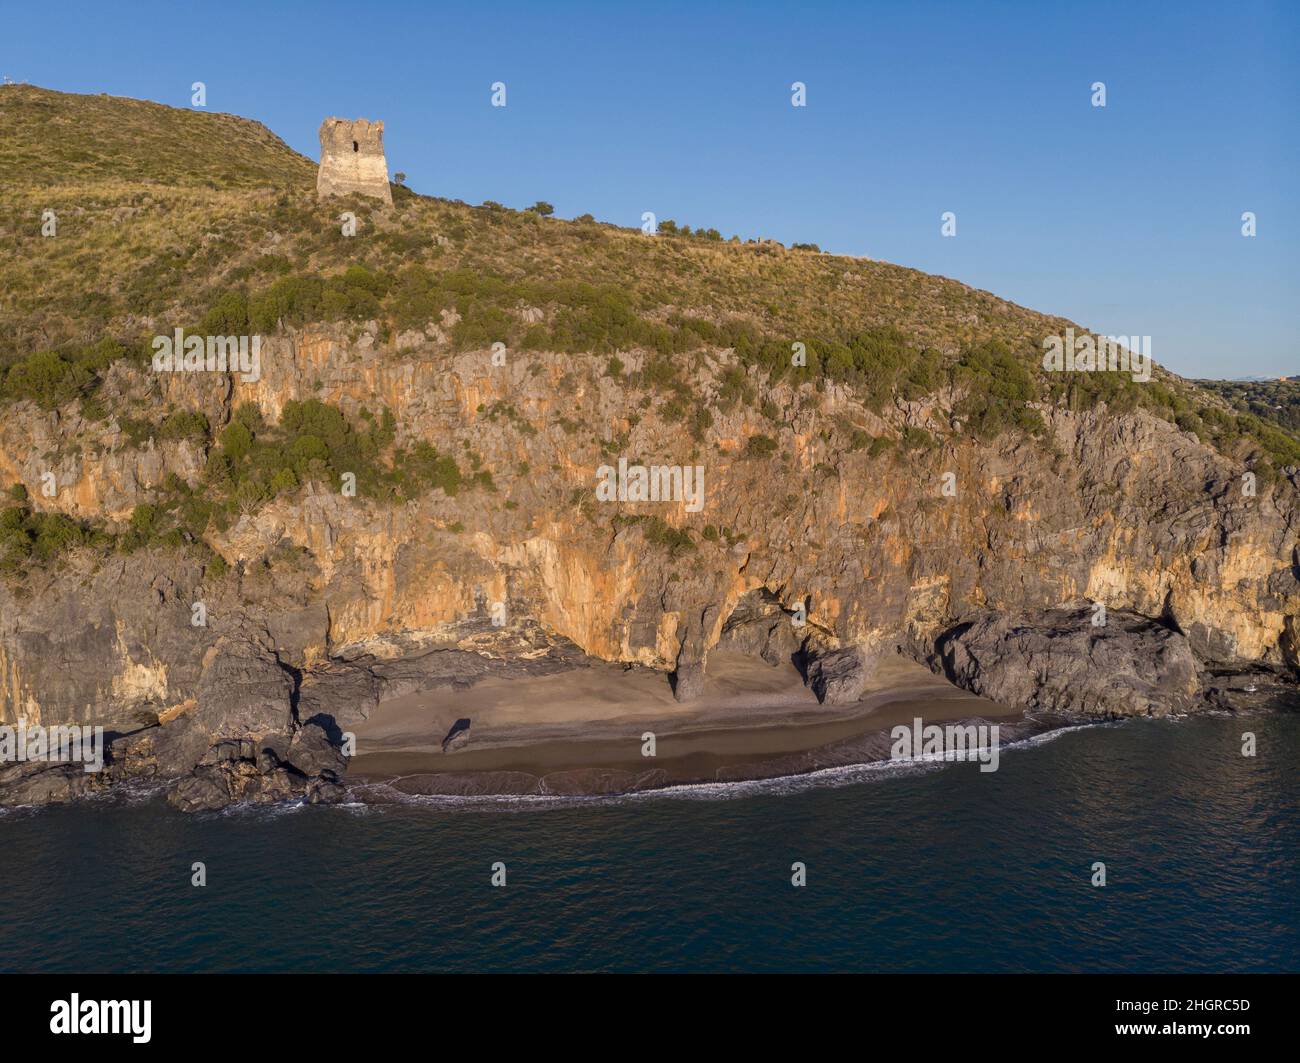 Aerial view, Troncone's Beach, Marina of Camerota, Campania Stock Photo